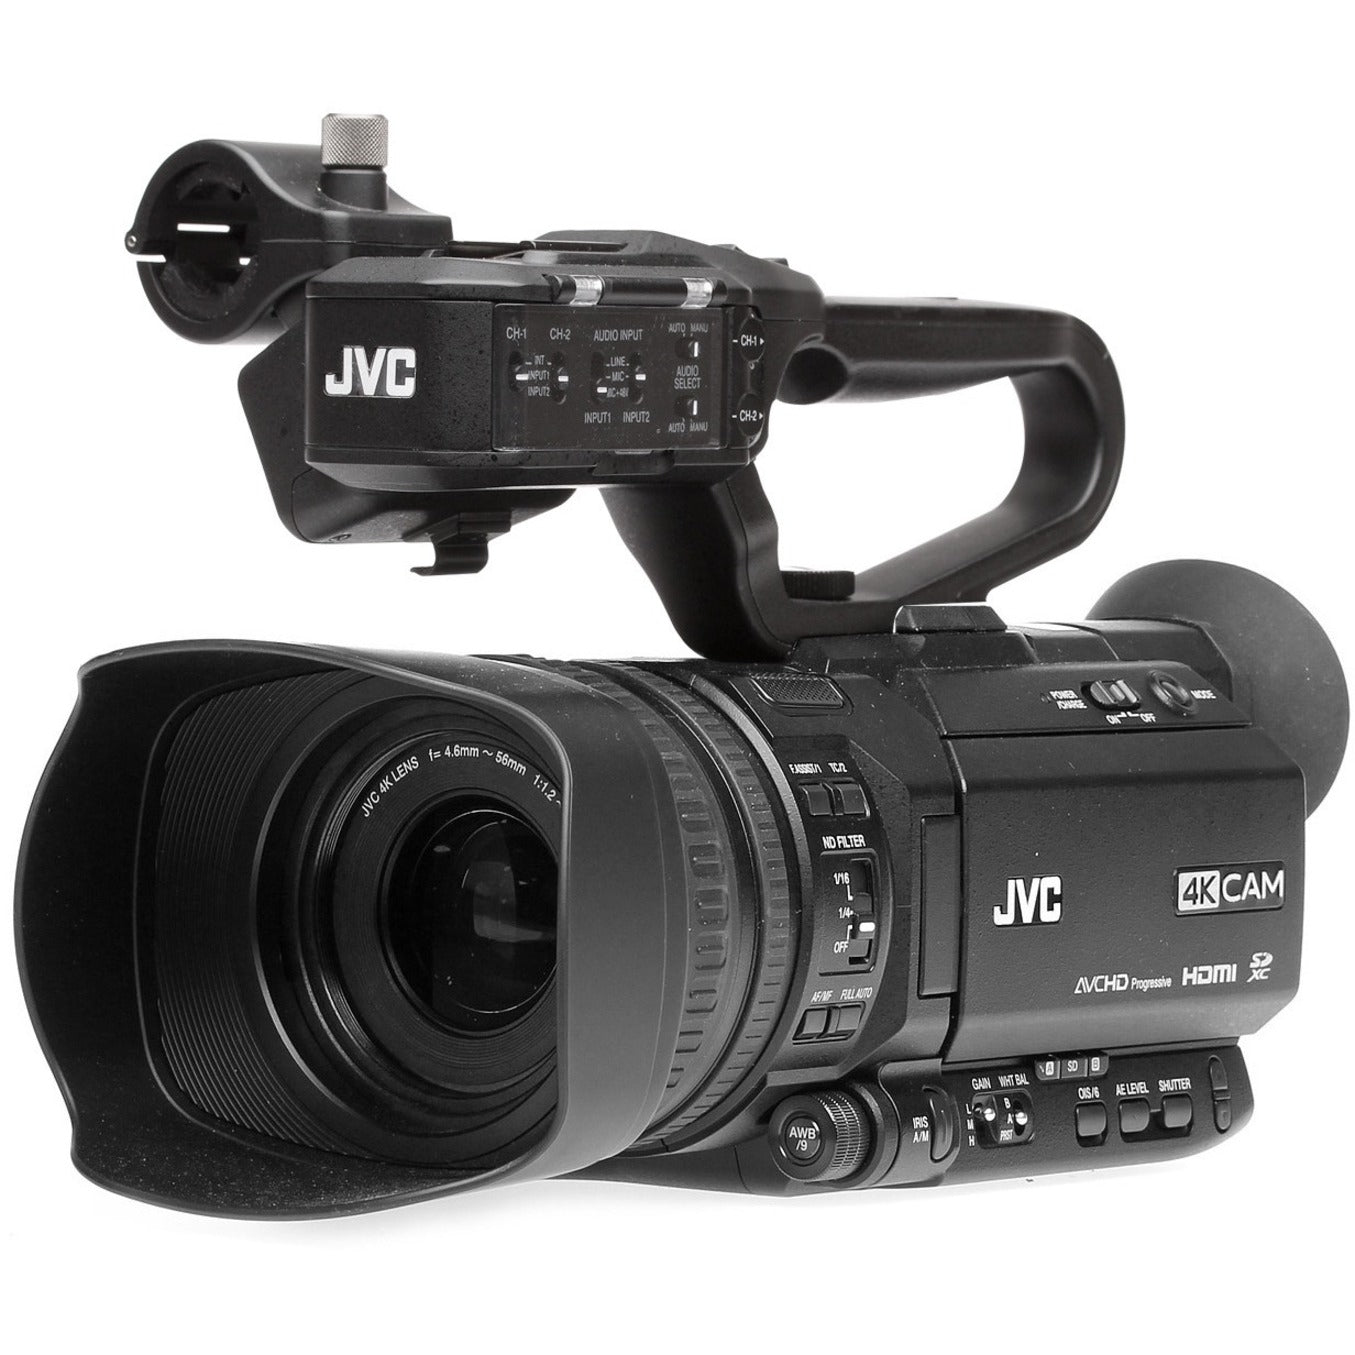 JVC GY-HM180U 4KCAM Compact Handheld Camcorder w/Integrated 12x Lens, 3.5" LCD Screen, 1/2.3" CMOS, 4K